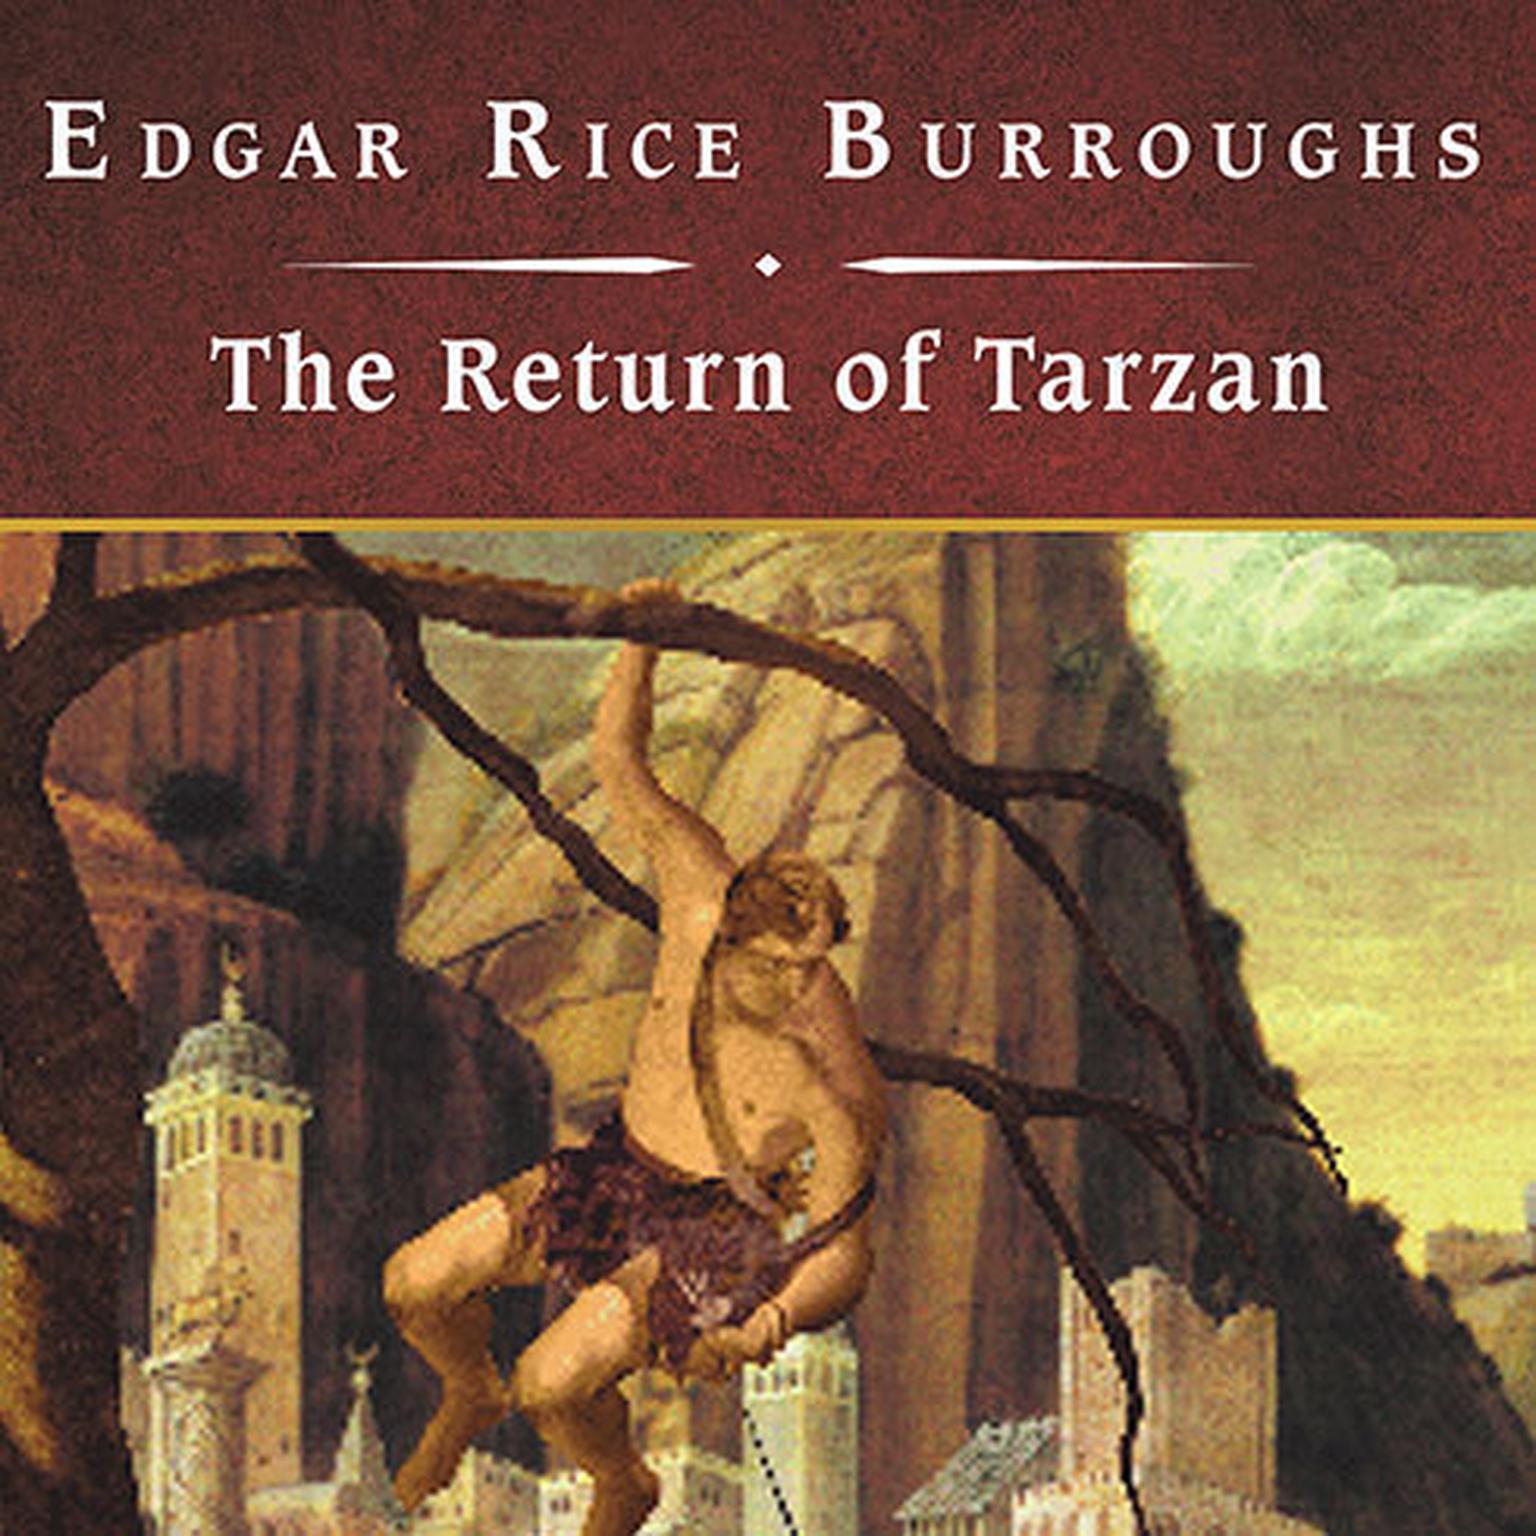 The Return of Tarzan, with eBook Audiobook, by Edgar Rice Burroughs